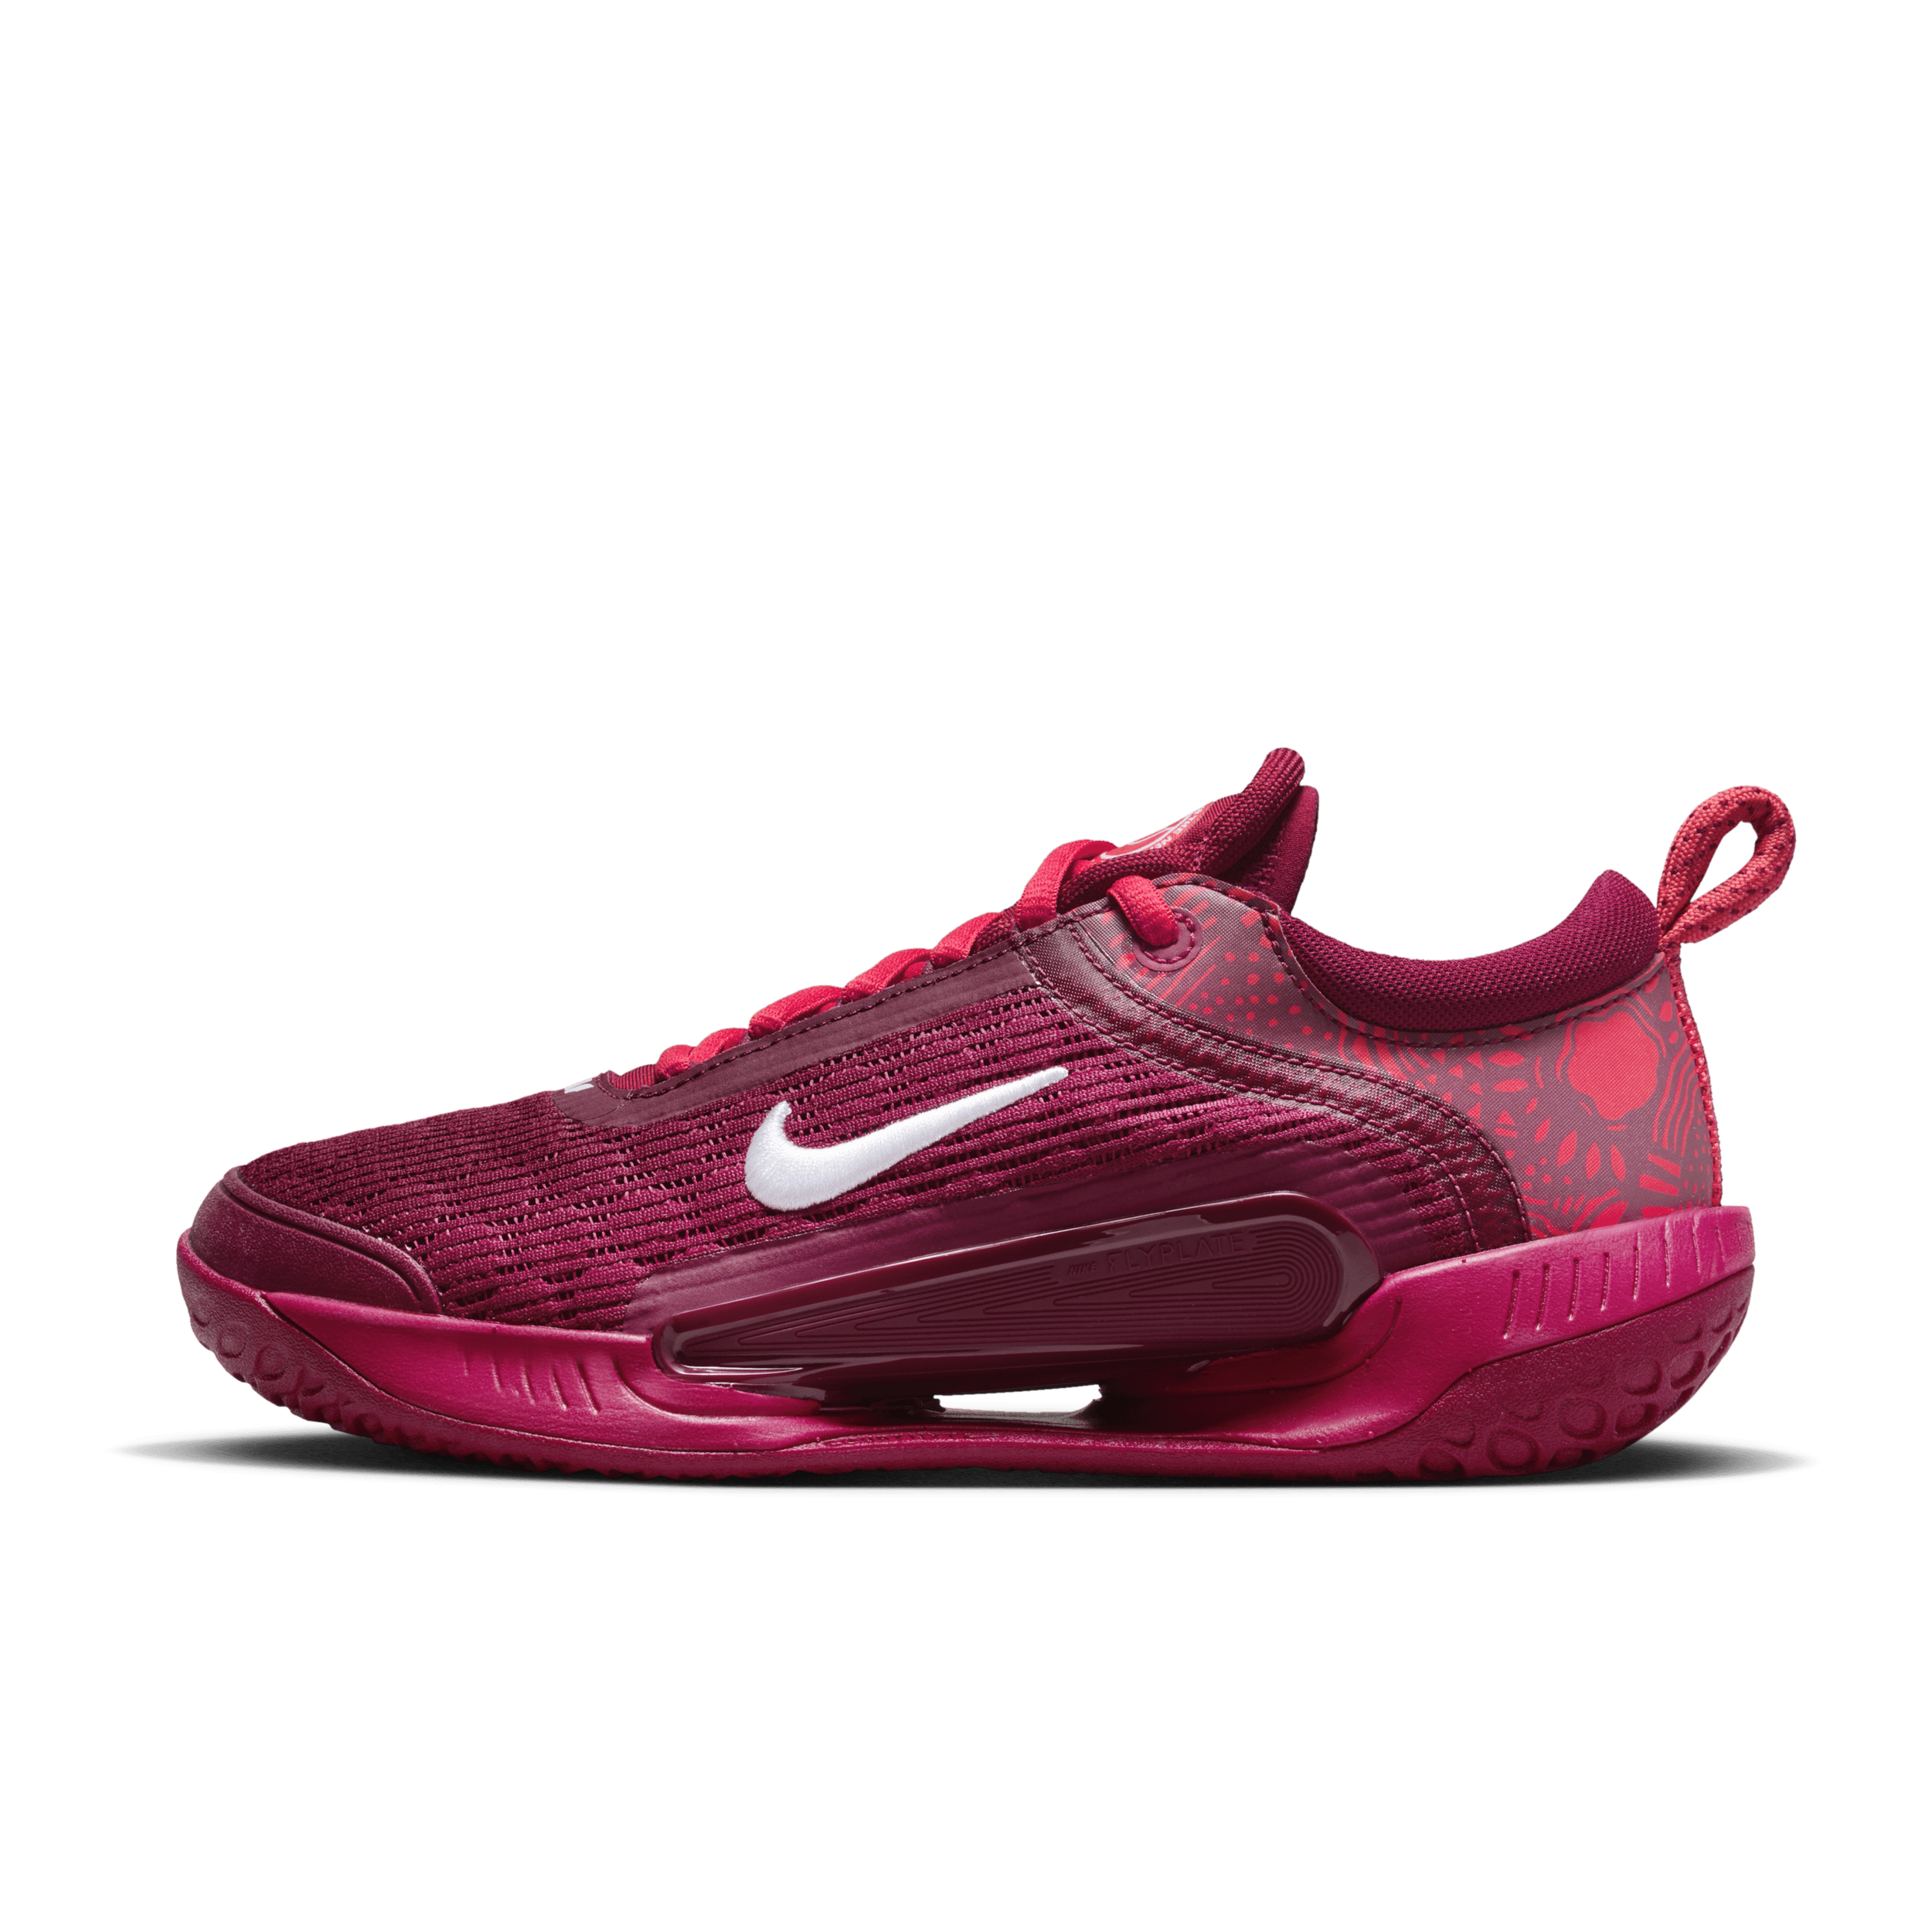 NikeCourt Air Zoom NXT-hardcourt-tennissko til kvinder - rød